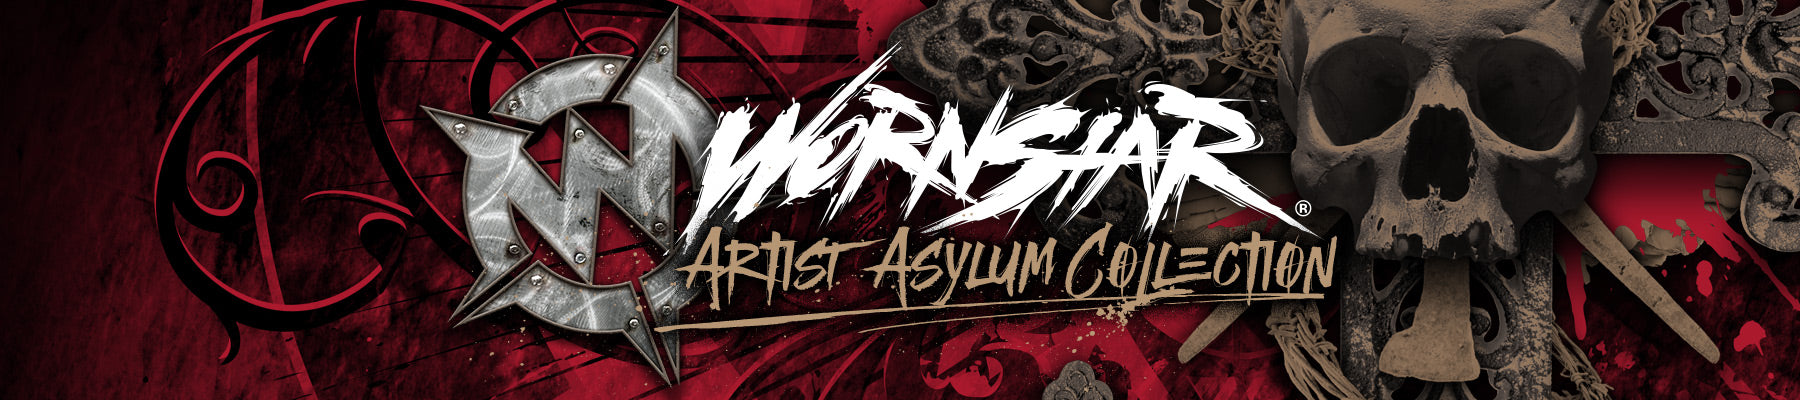 Artist Asylum Collection